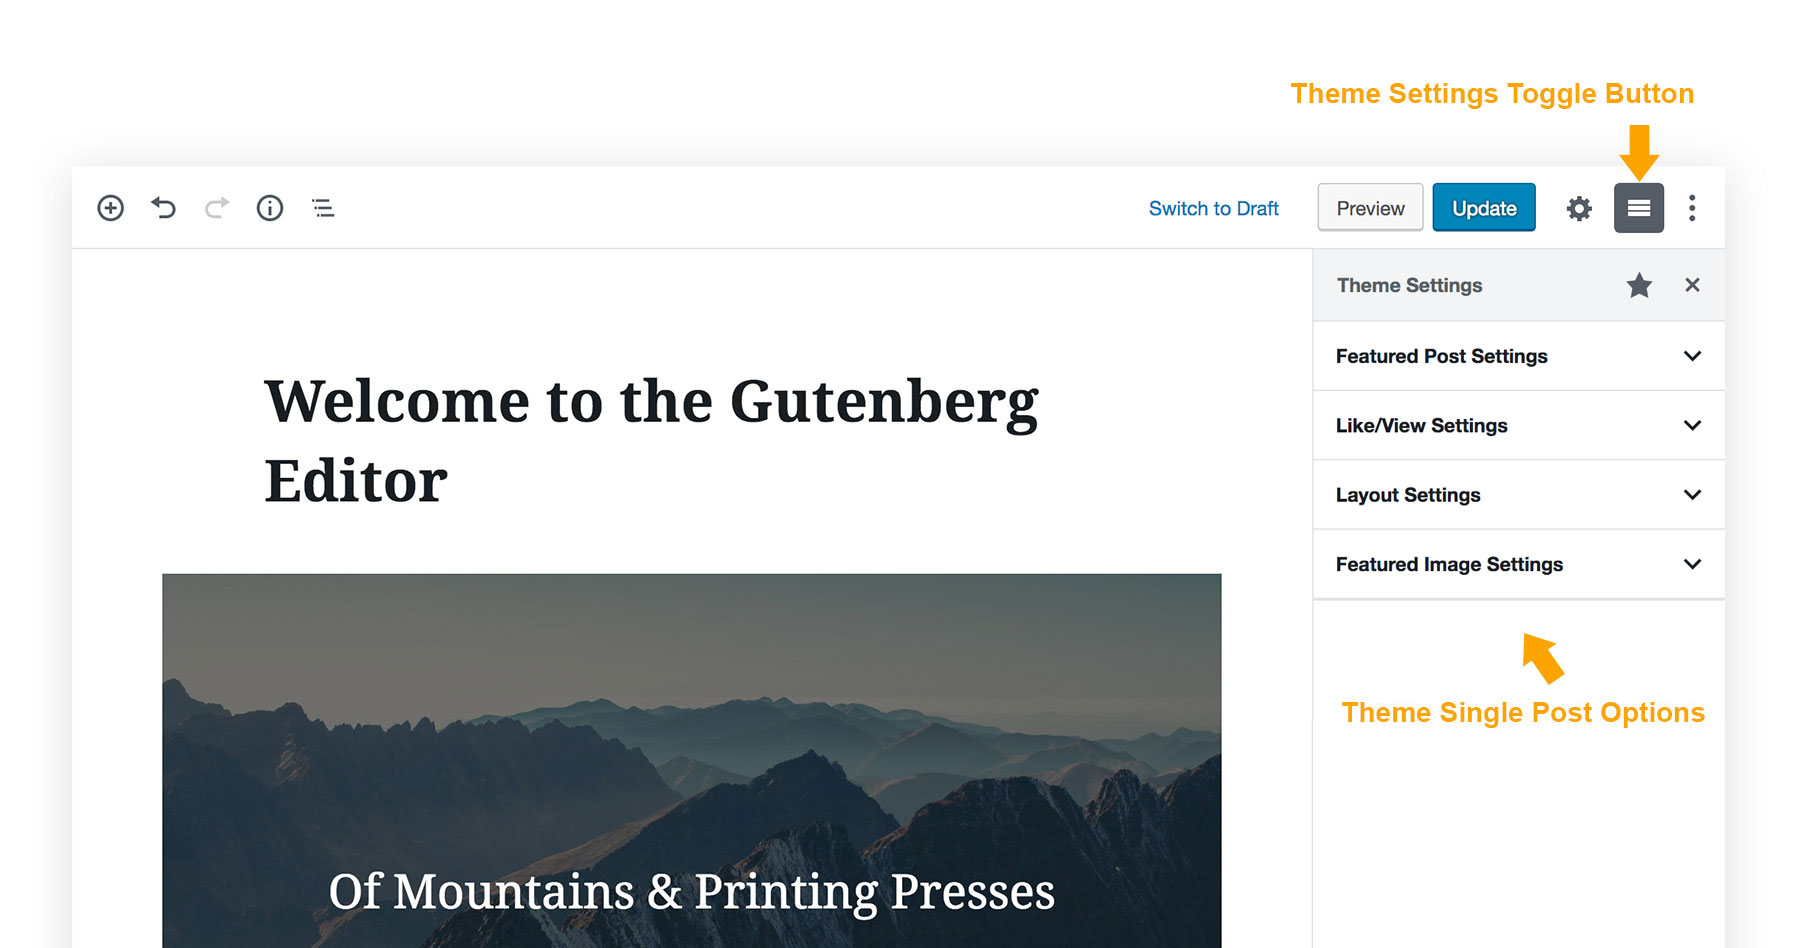 Eaven theme Single Post Options integrated to Gutenberg Sidebar